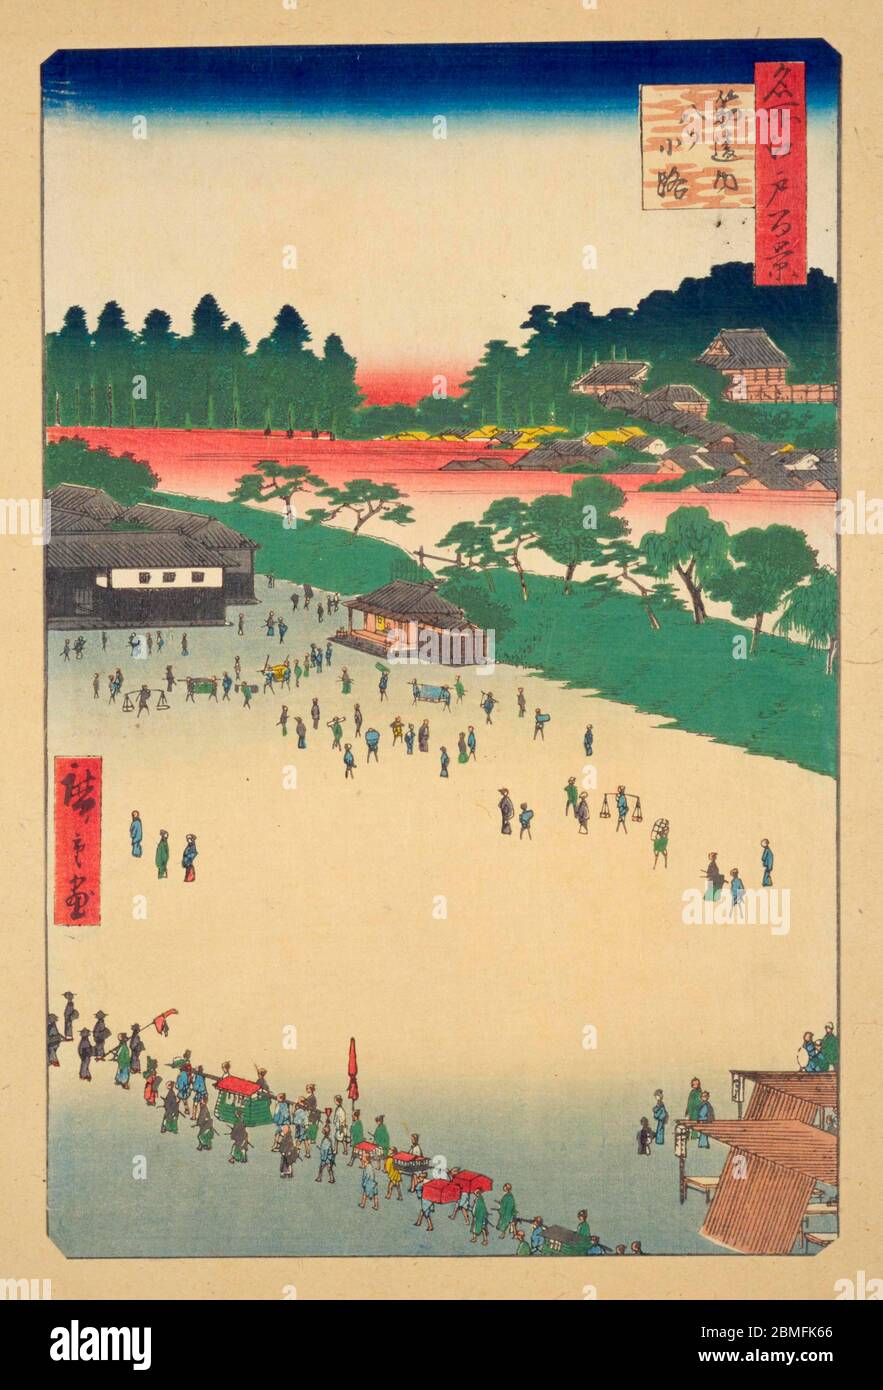 [ 1850s Japan - Samurai Procession ] —   A Samurai Procession at Yatsukoji junction, an open space functioning as a fire-break in Edo (current Tokyo), 1857 (Ansei 4). In the back, the Kanda Myojin Shrine is visible.  This woodblock print is image 9 in One Hundred Famous Views of Edo (名所江戸百景, Meisho Edo Hyakkei), a series created by ukiyoe artist Utagawa Hiroshige (歌川広重, 1797–1858).  It is one of 42 spring scenes in the series.  Title: Yatsukoji, Inside Sujikai Gate (筋違内八ツ小路, Sujikai uchi Yatsukoji)  19th century vintage Ukiyoe woodblock print. Stock Photo